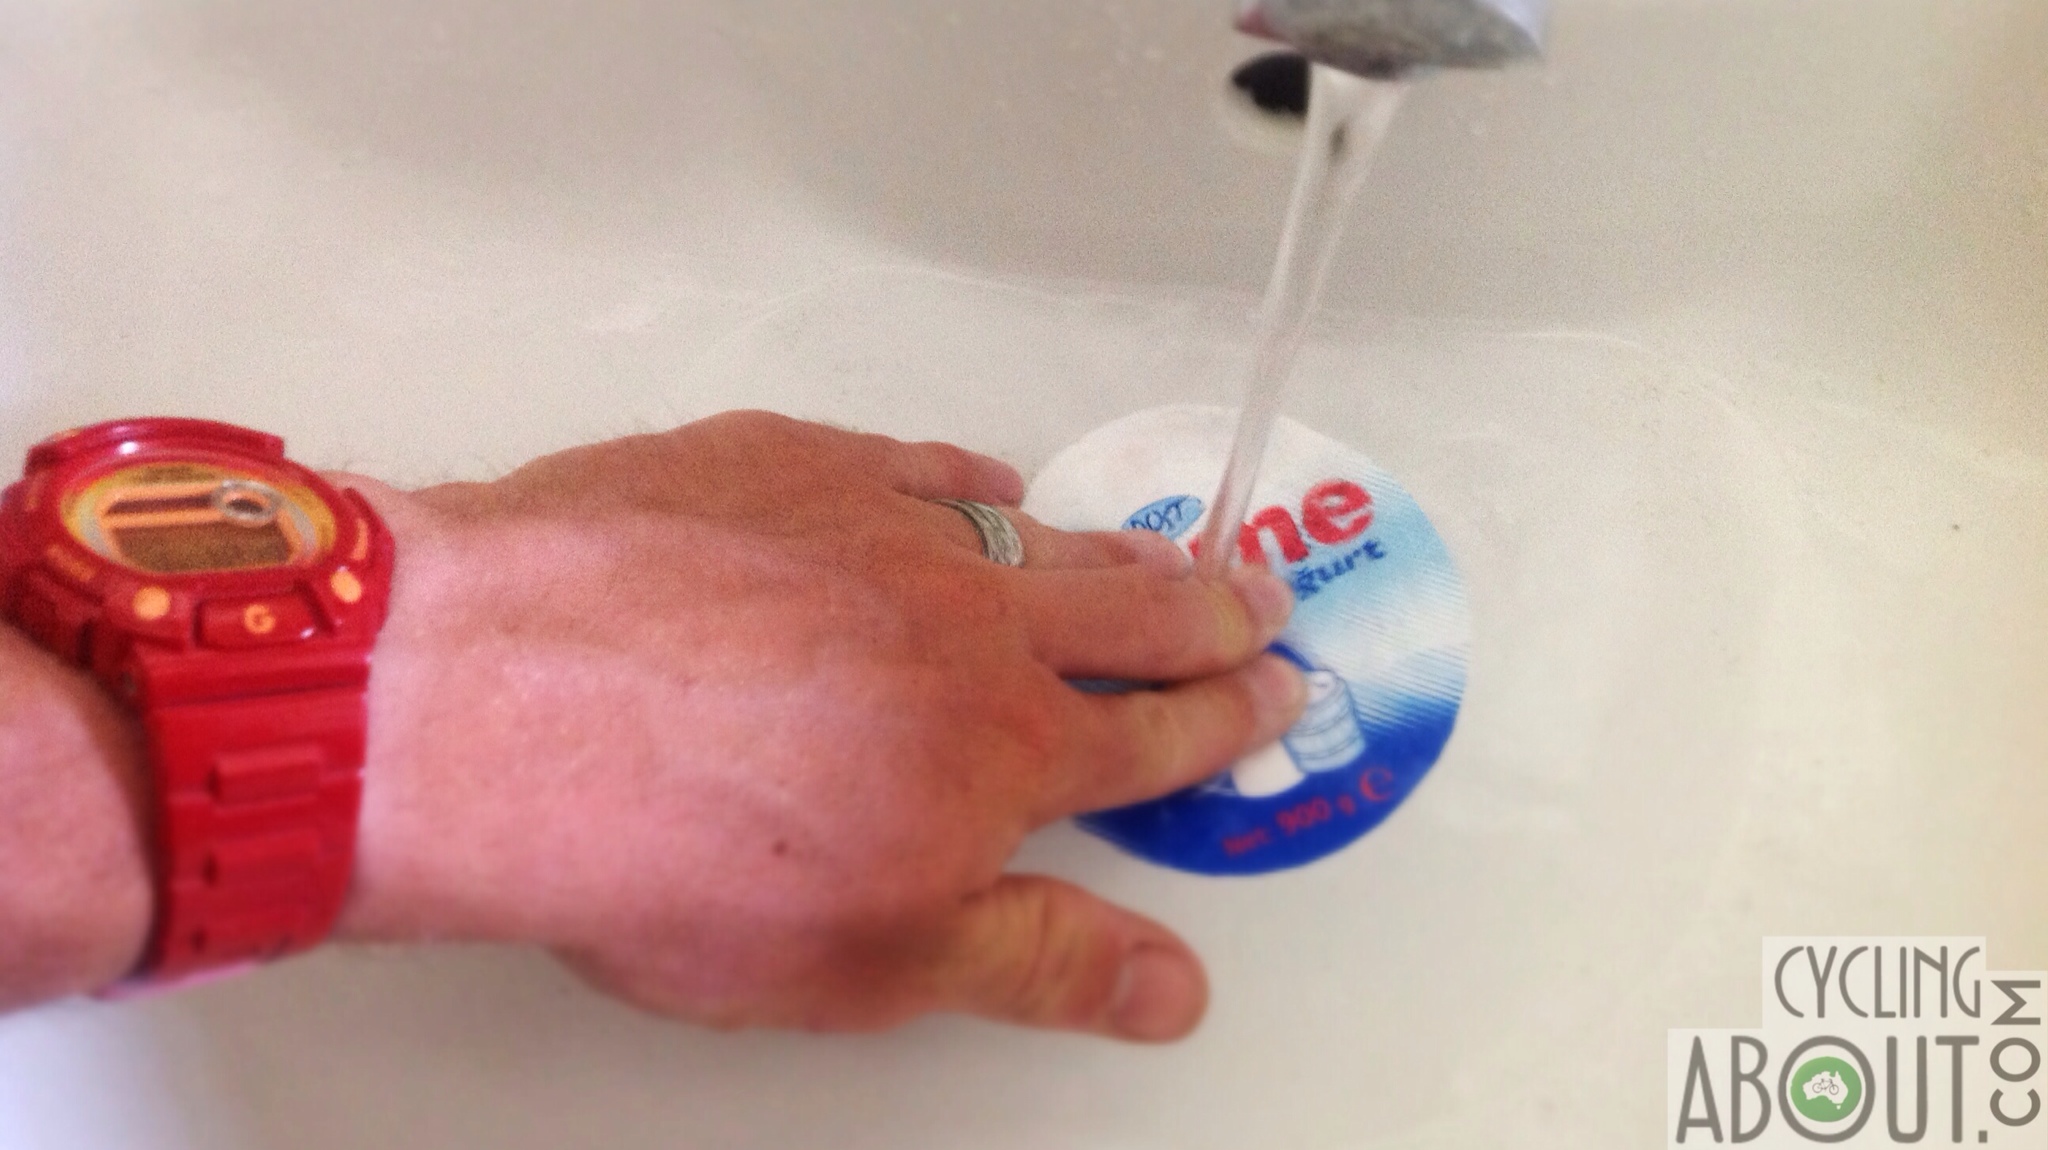 Diy Make A Universal Sink Plug, How To Cover Bathtub Drain Diy